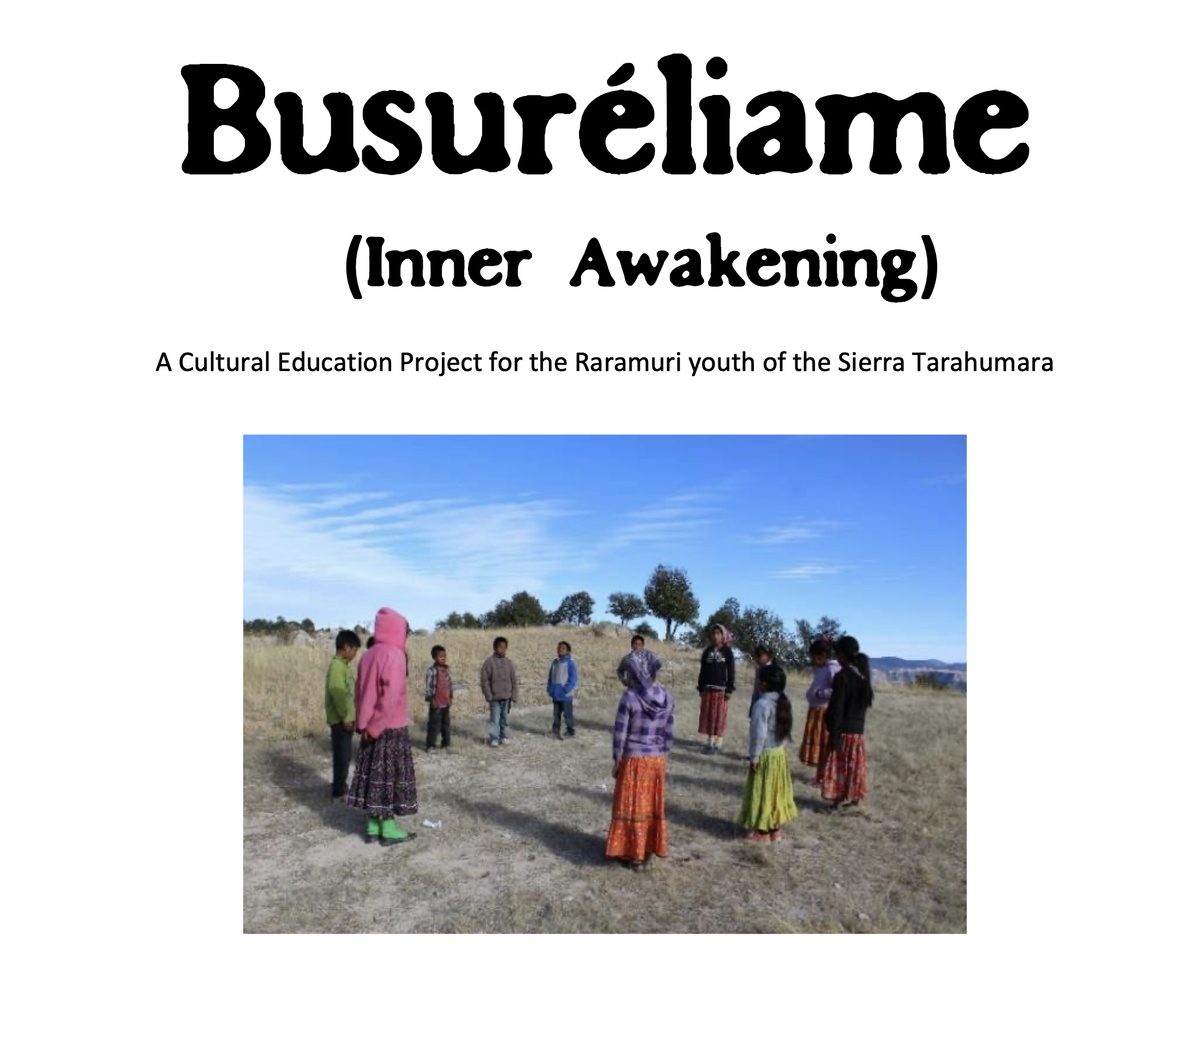 Busureliame Cultural Education Fund - LUNA Sandals